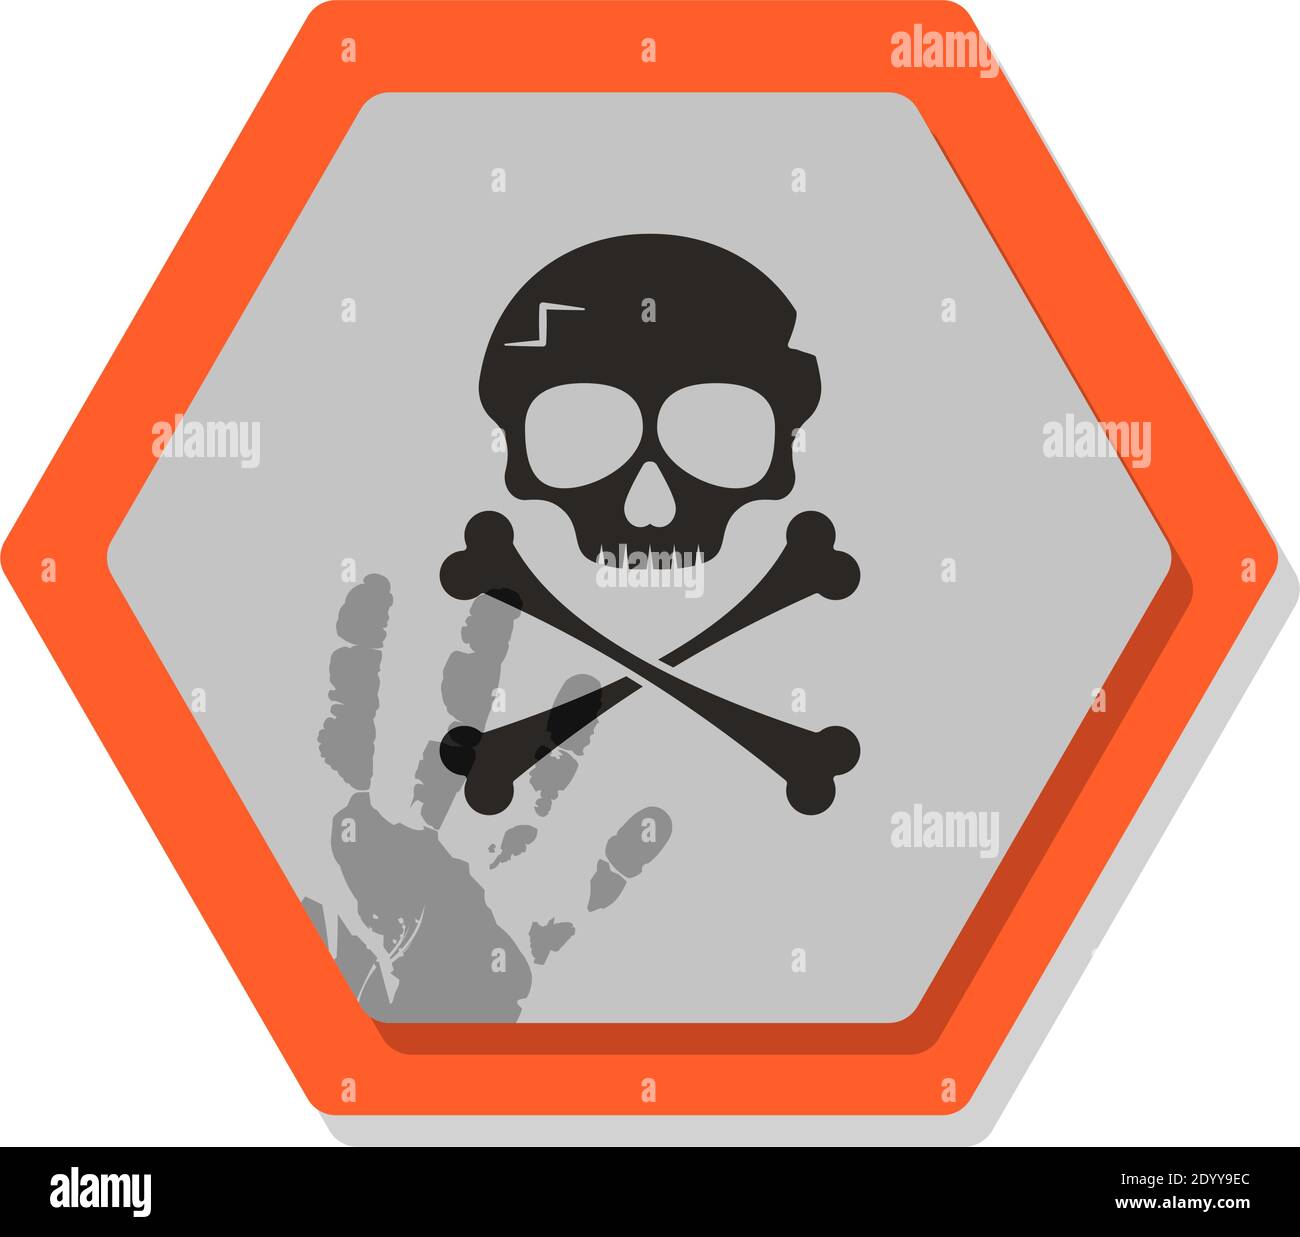 Skull and crossbones hexagonal danger sign. Flat style isolated on white background. Stock Vector